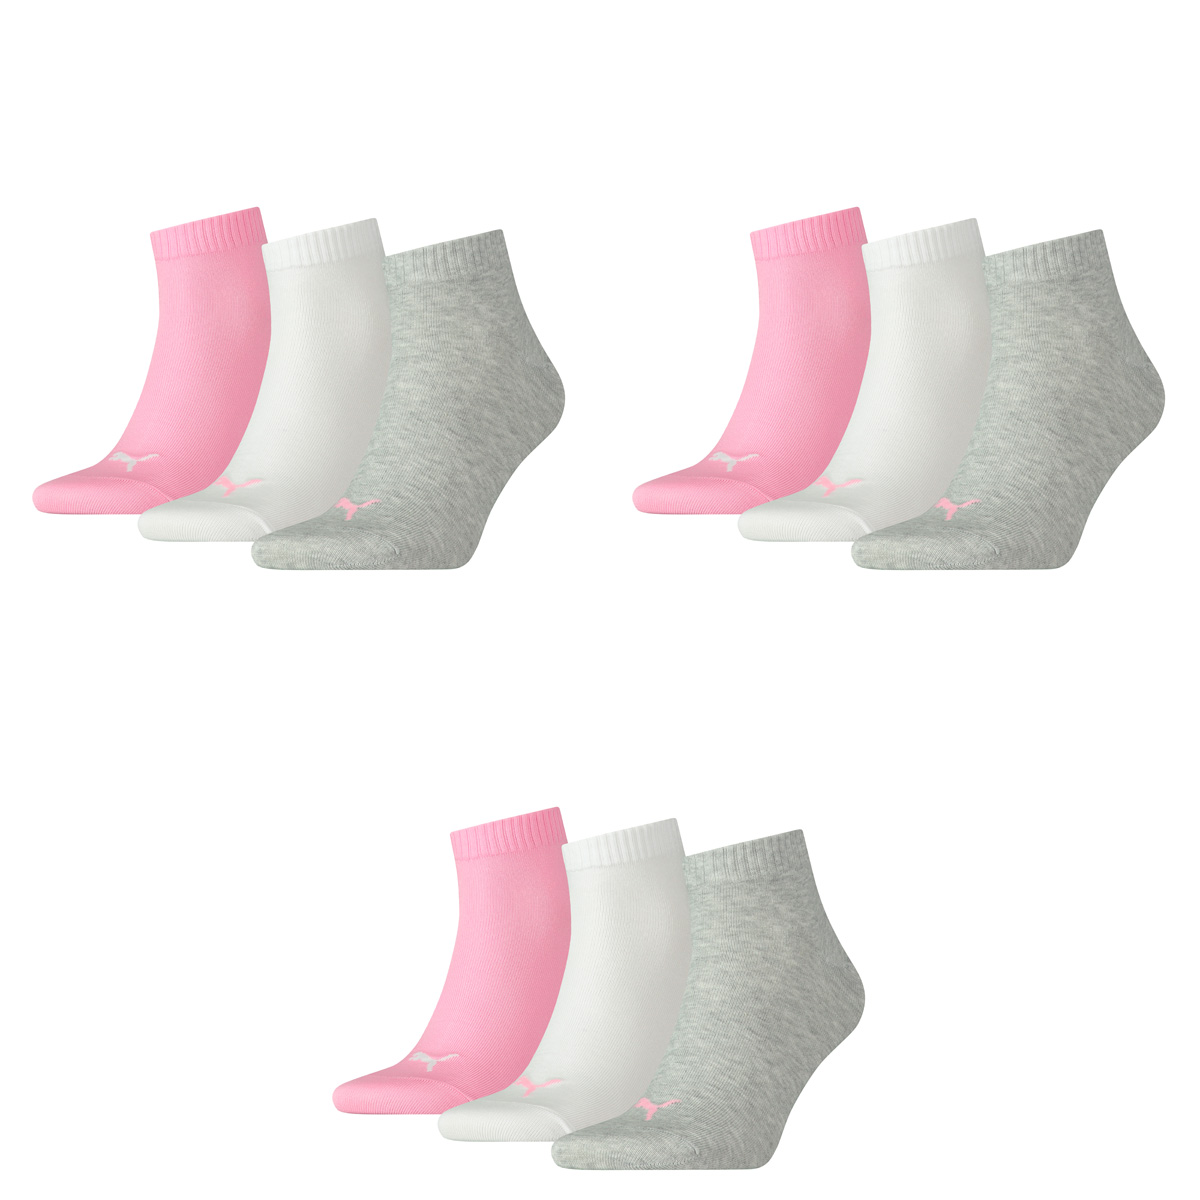 Puma 15 Paar Unisex Quarter Socken Sneaker Gr. 35-49 für Damen Herren Füßlinge, Socken & Strümpfe:39-42, Farbe:395 - prism pink